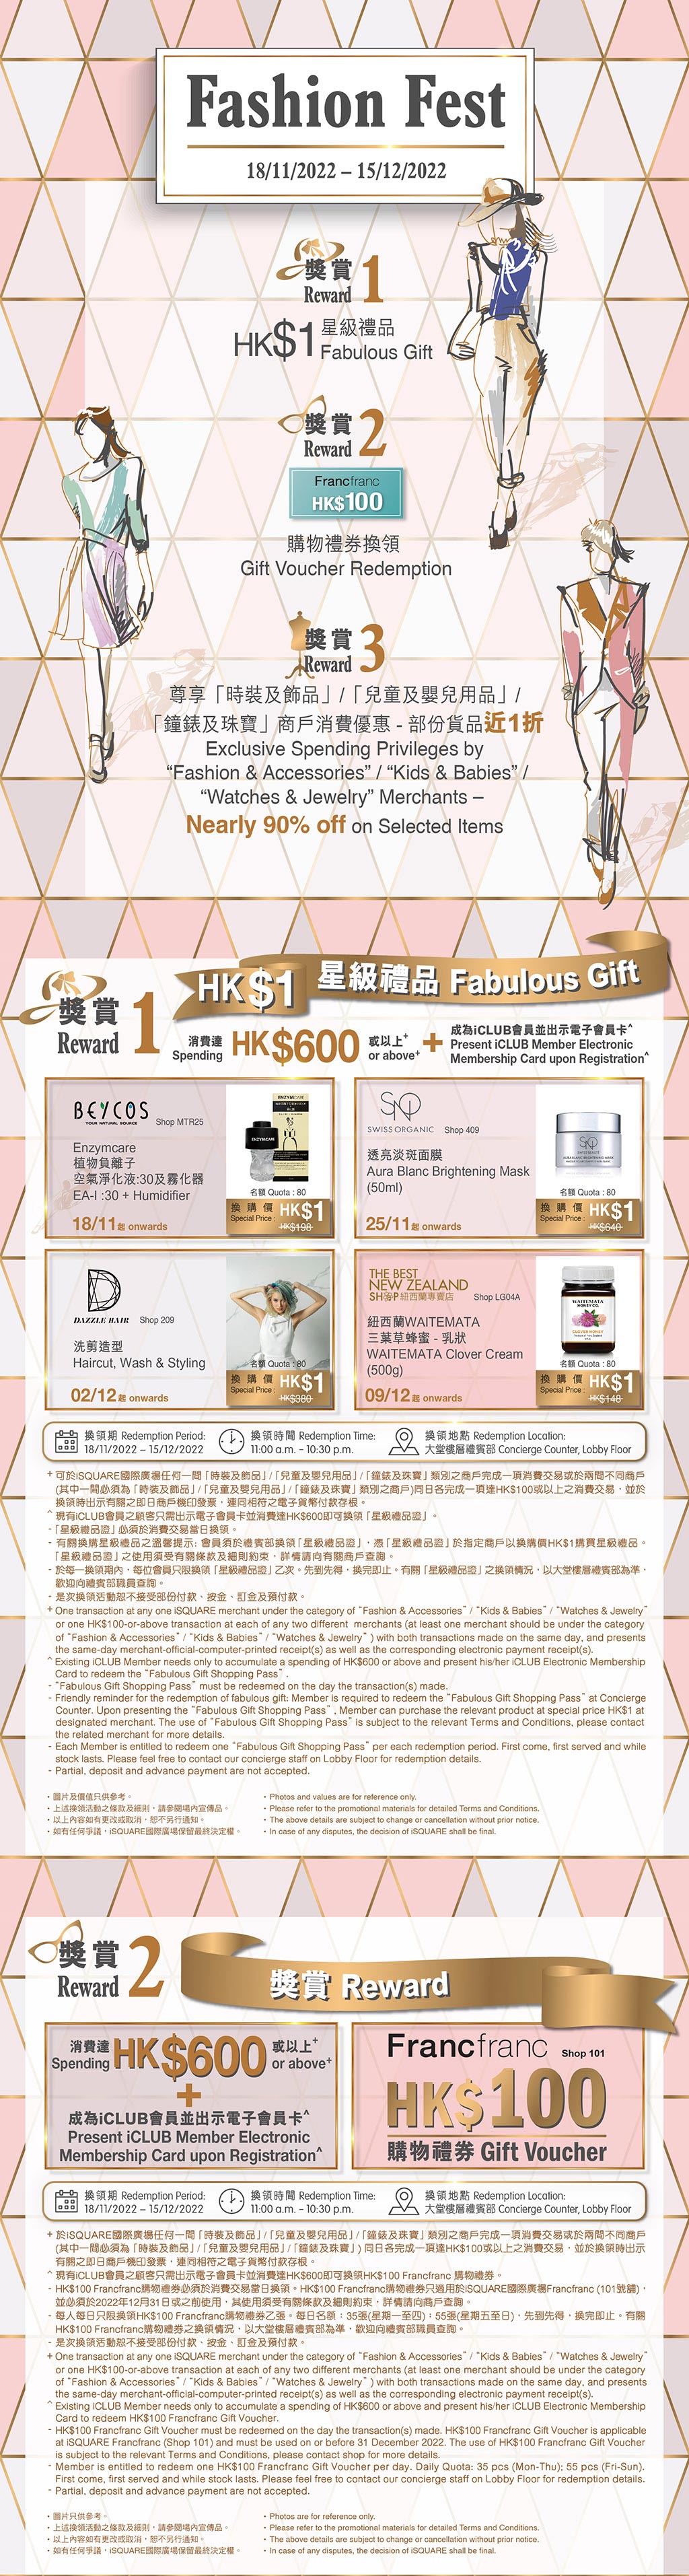 Fashion Fest 2022 : 消費換領HK$1星級禮品及HK$100 Francfranc 購物禮券/商戶優惠近1折